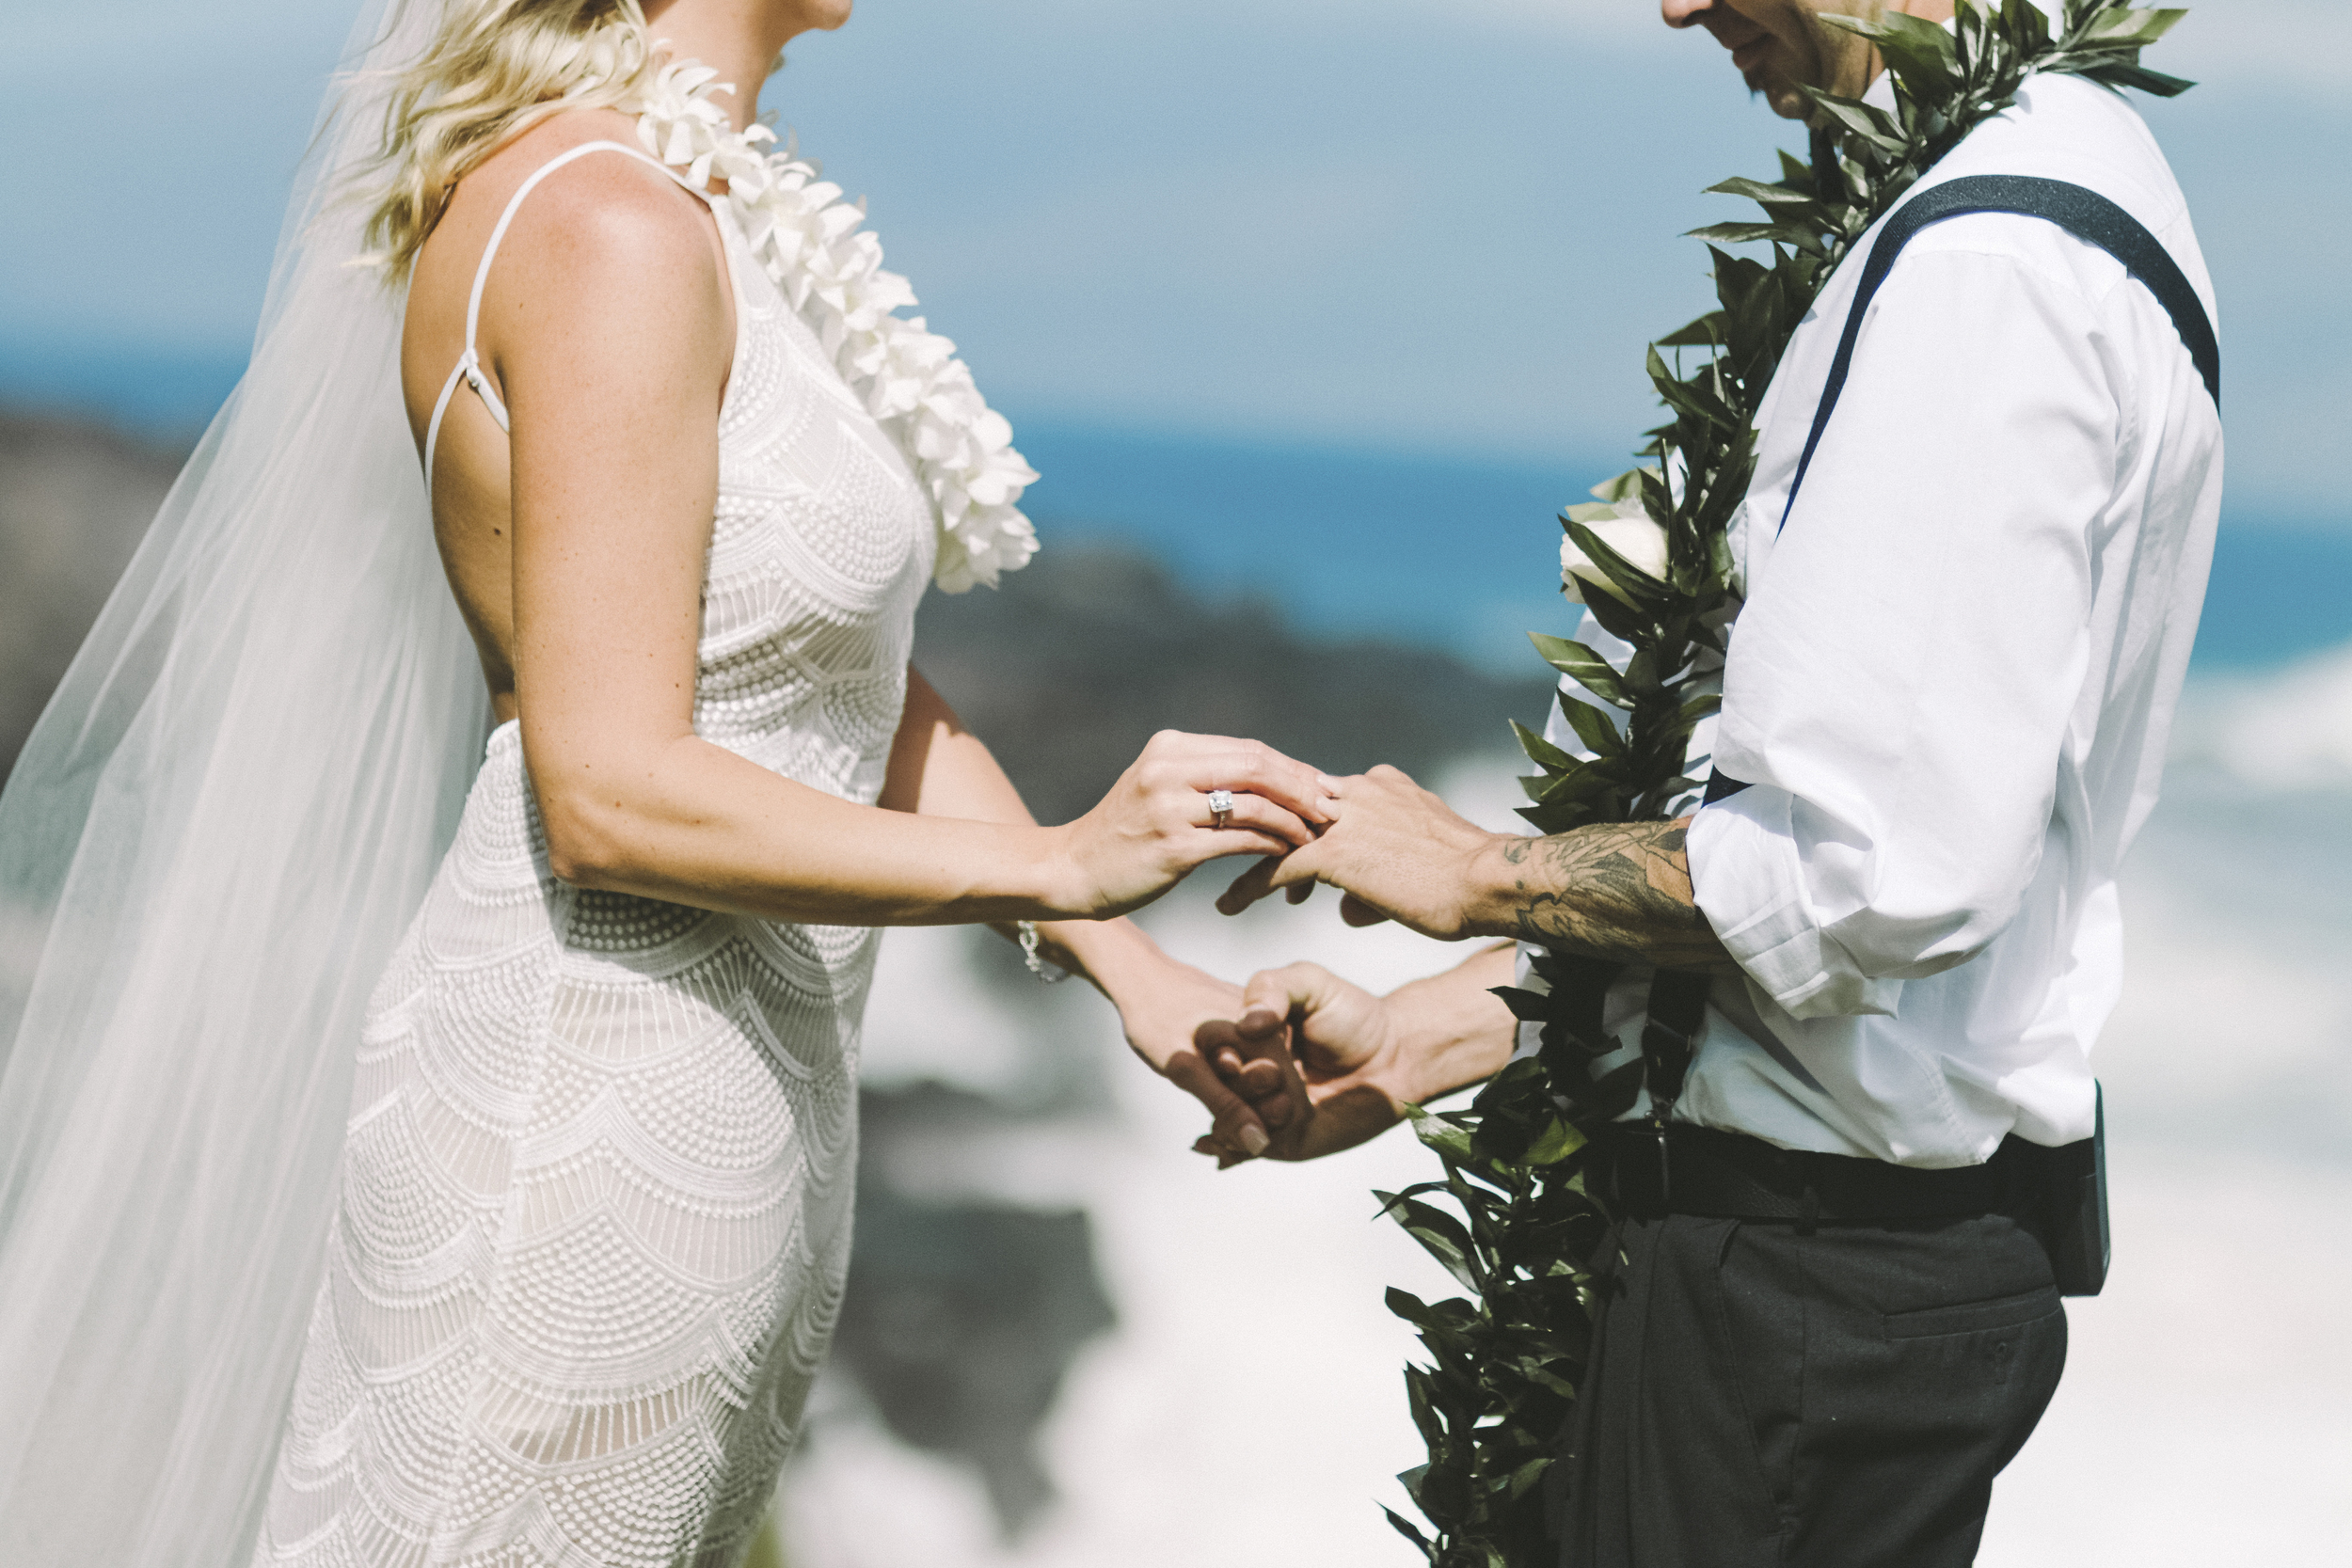 angie-diaz-photography-hawaii-wedding-17.jpg